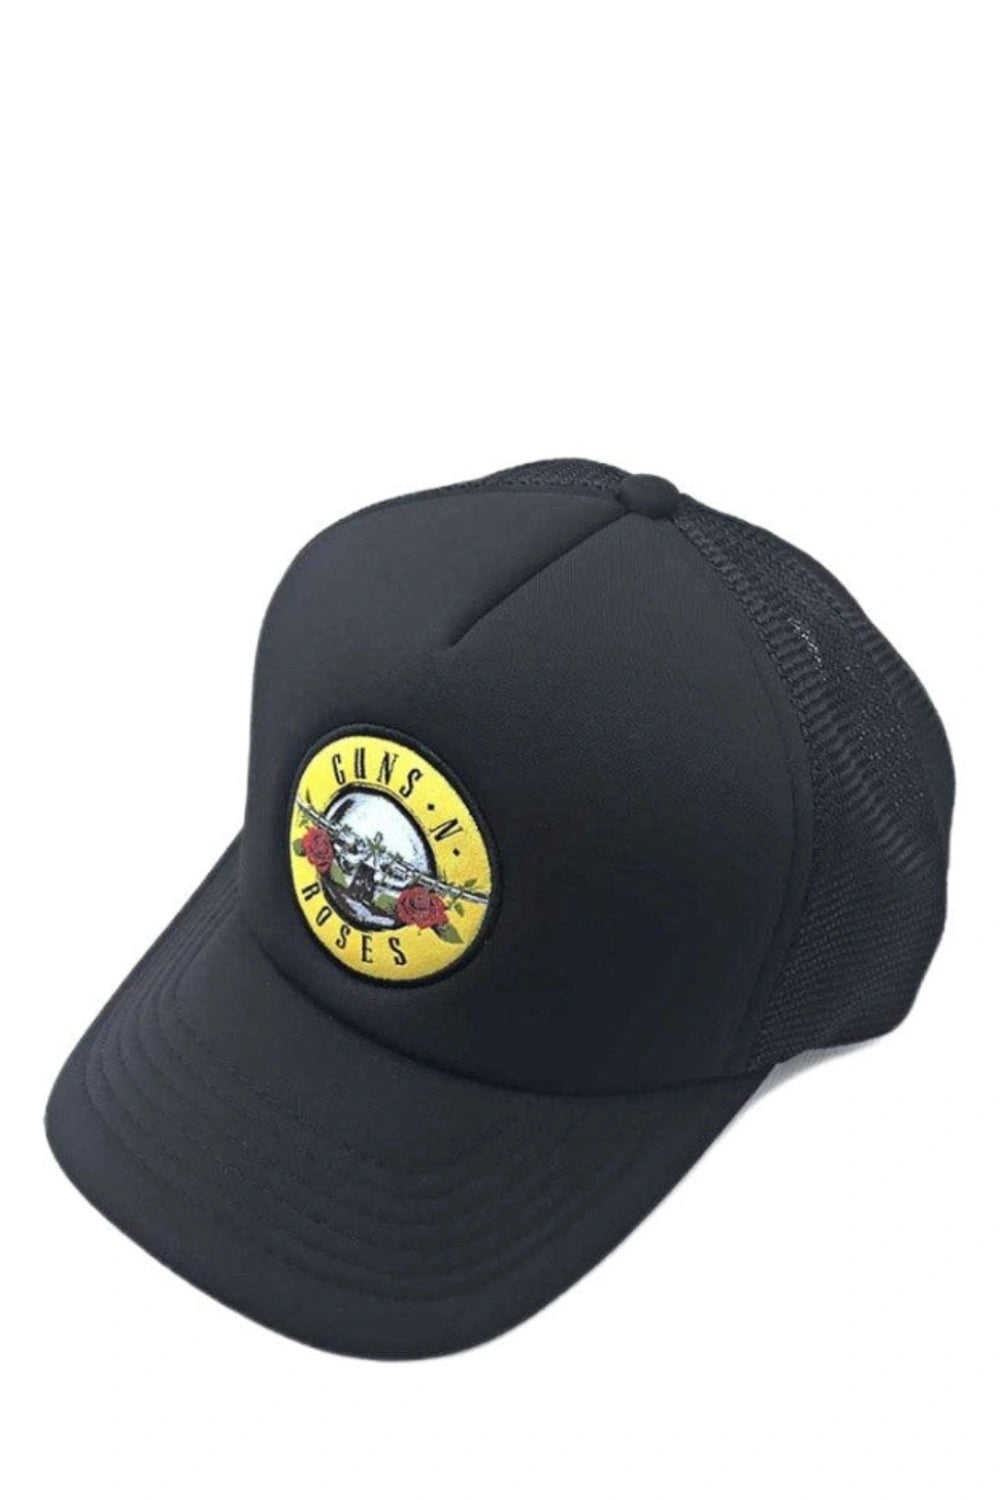 Guns N' Roses Unisex Mesh Back Cap: Circle Logo